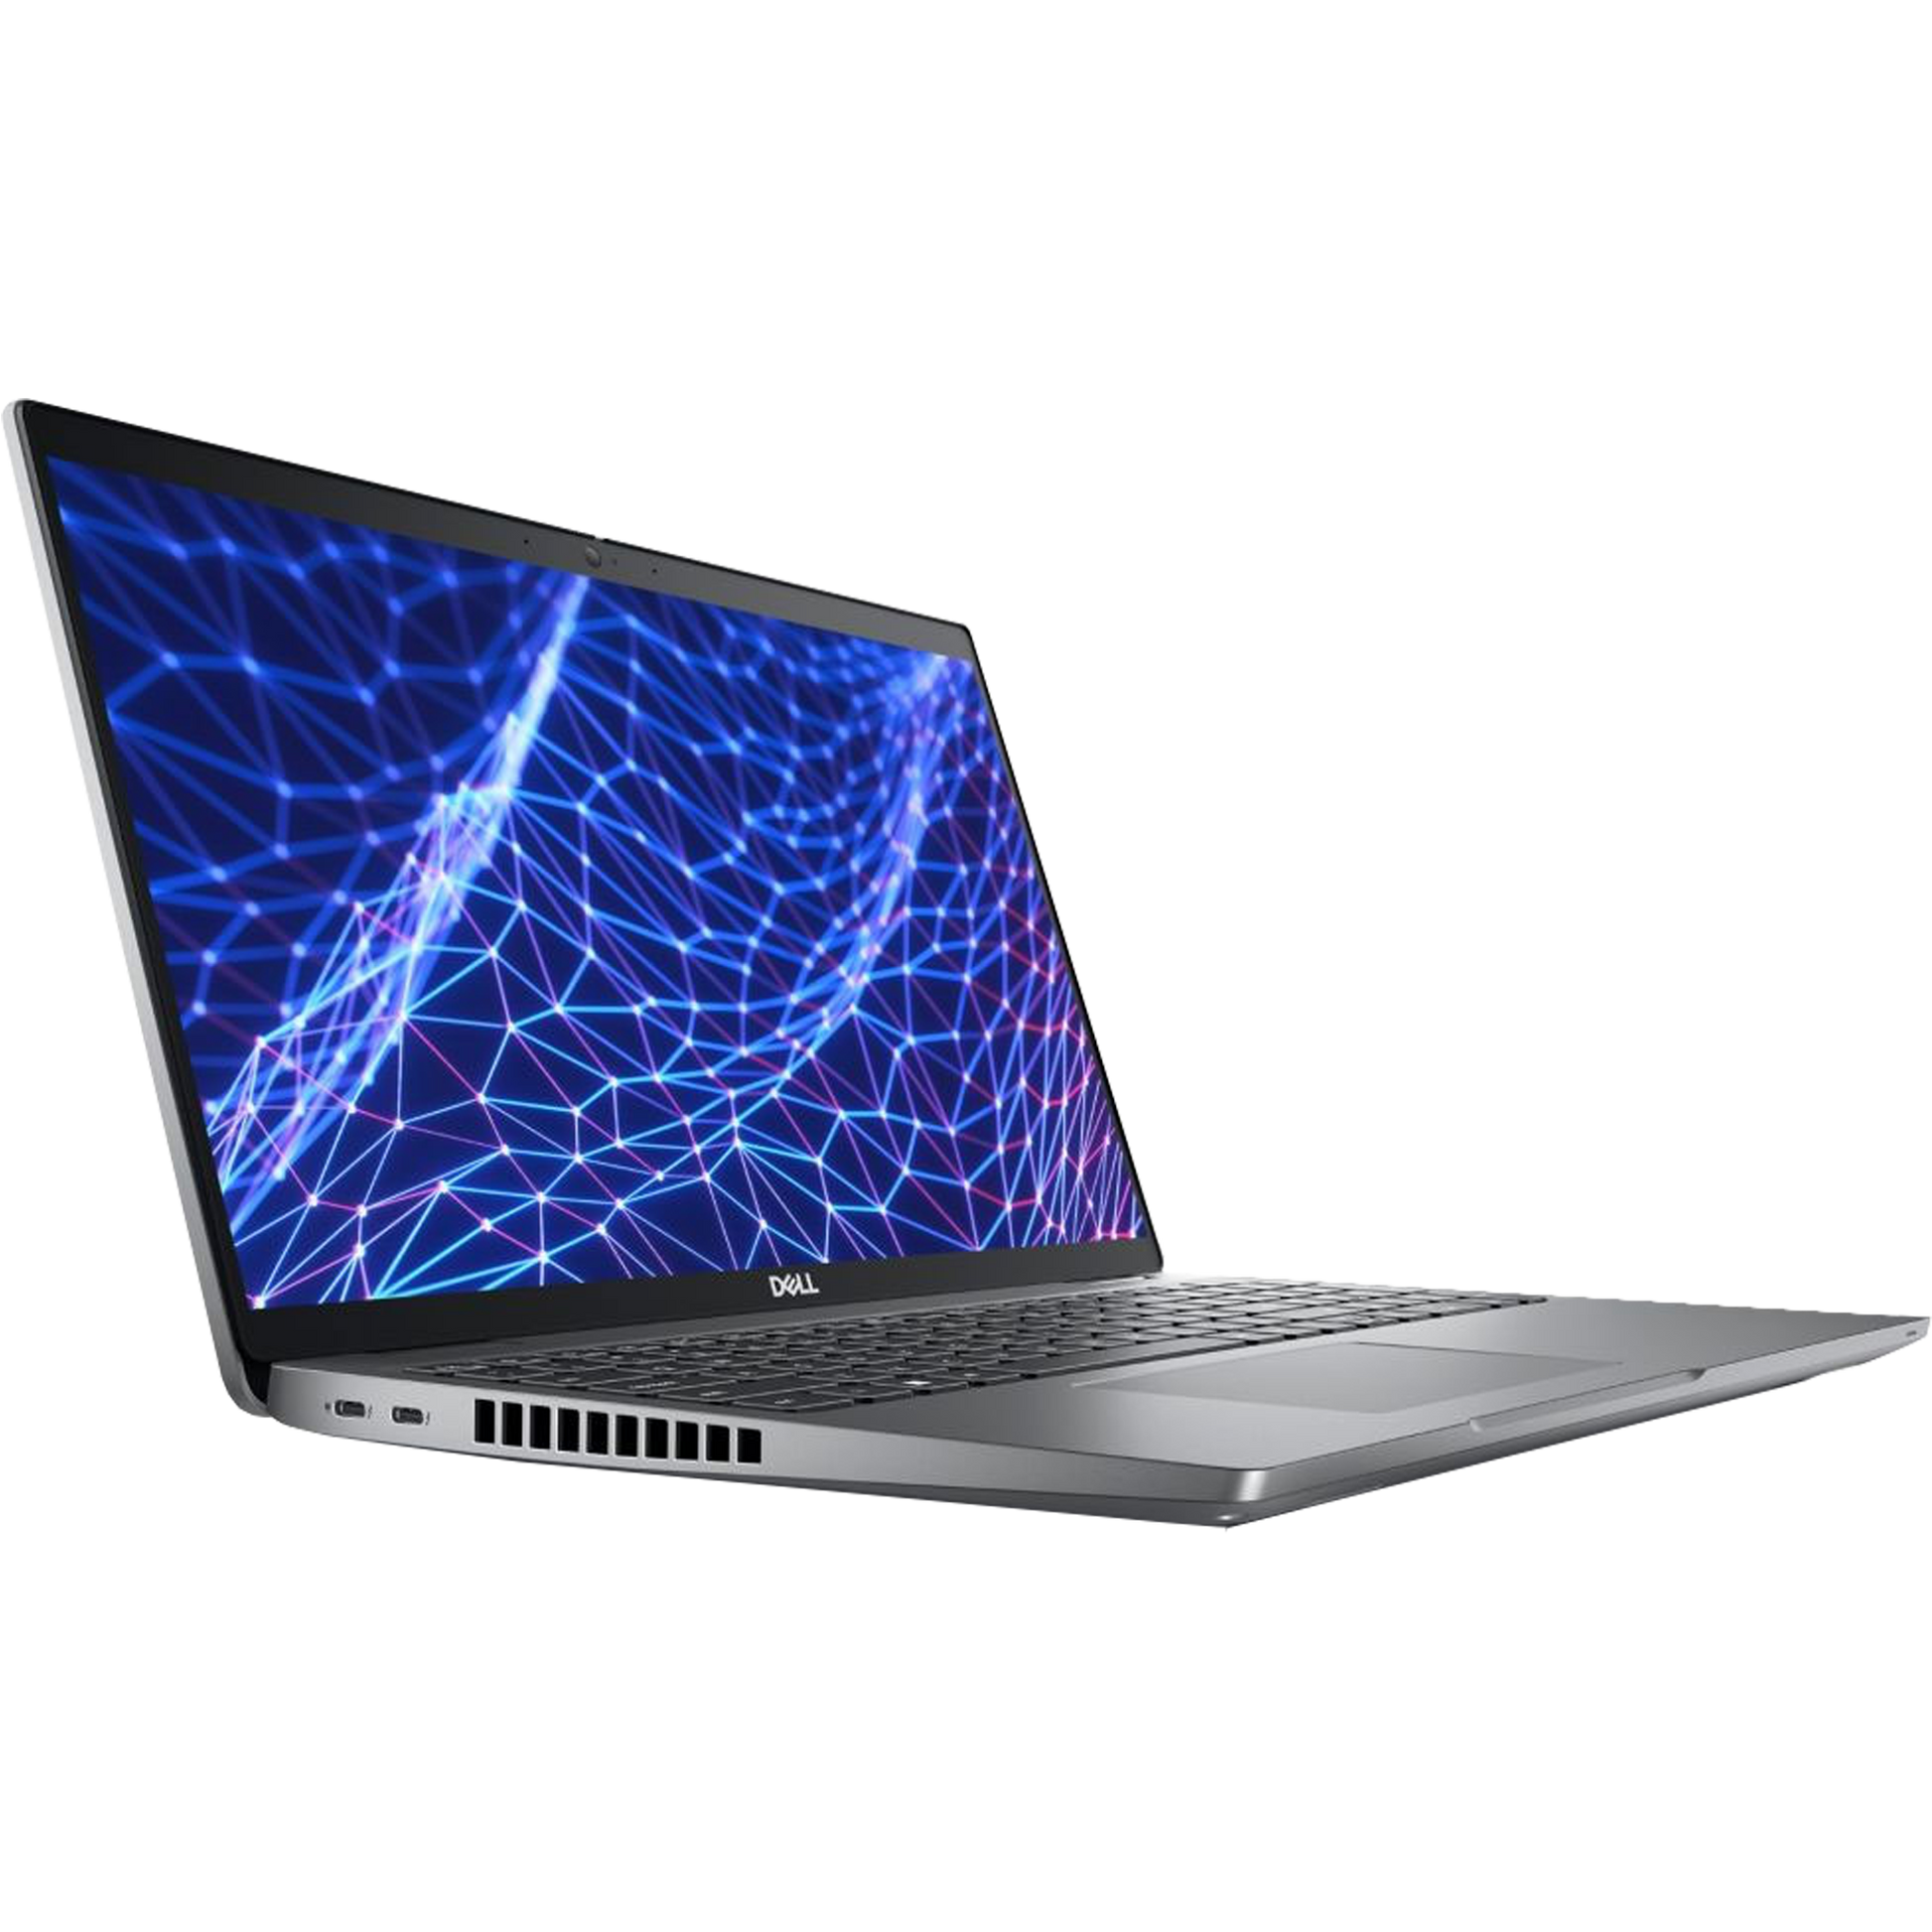 Dell Latitude 5530 Intel i7, 12th Gen Laptop with 32GB Ram + GPU Laptops - Refurbished